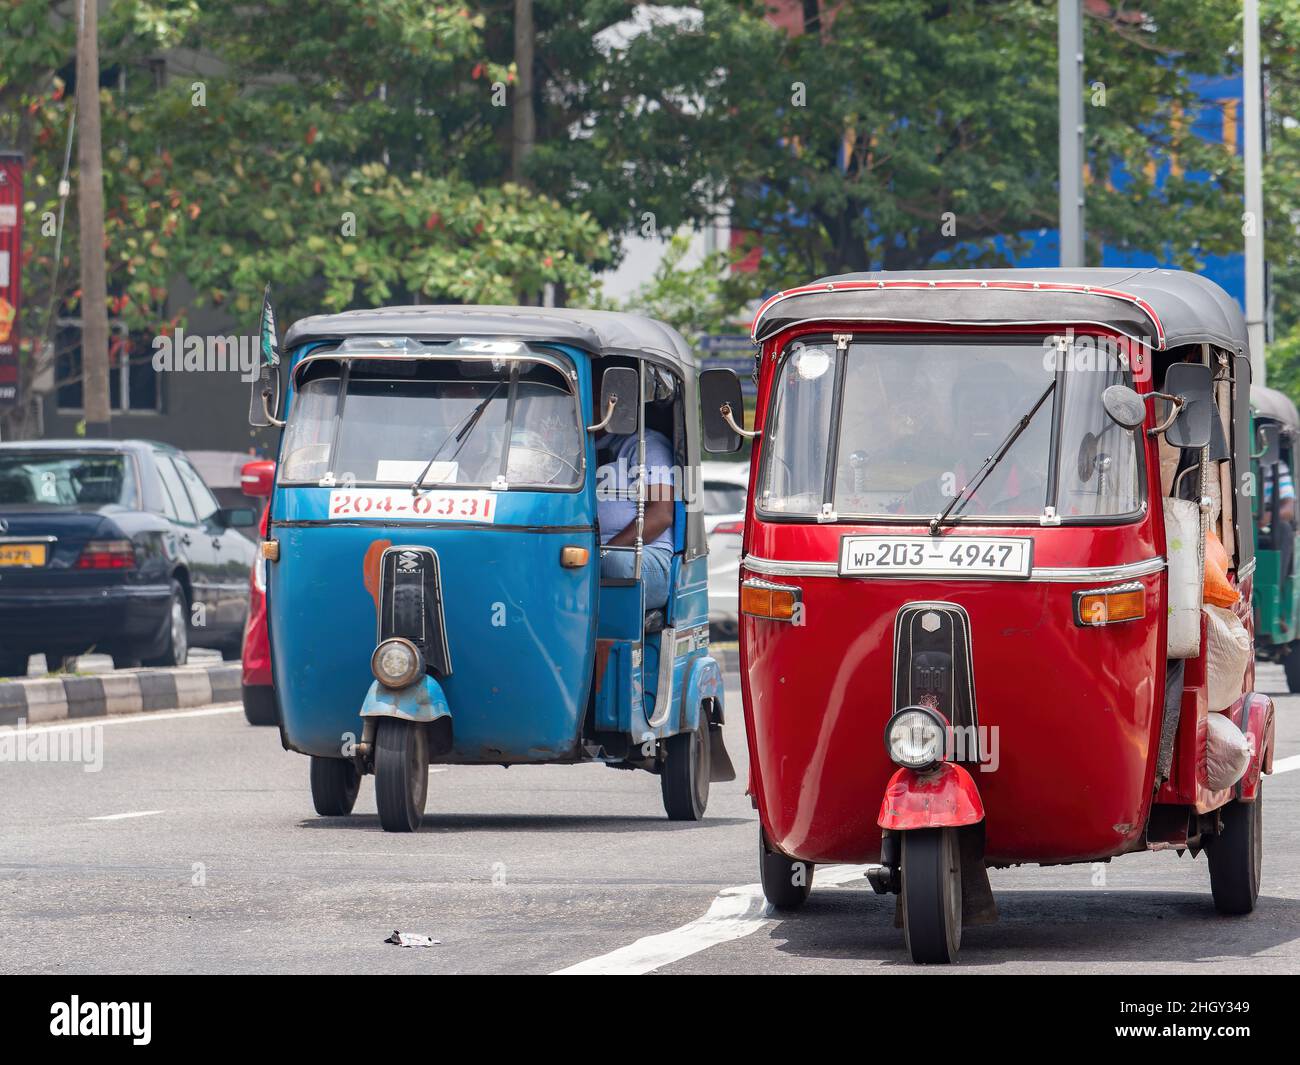 BTwo auto rickshaws, also called tuk-tuk, in Colombo, Sri Lanka Stock Photo